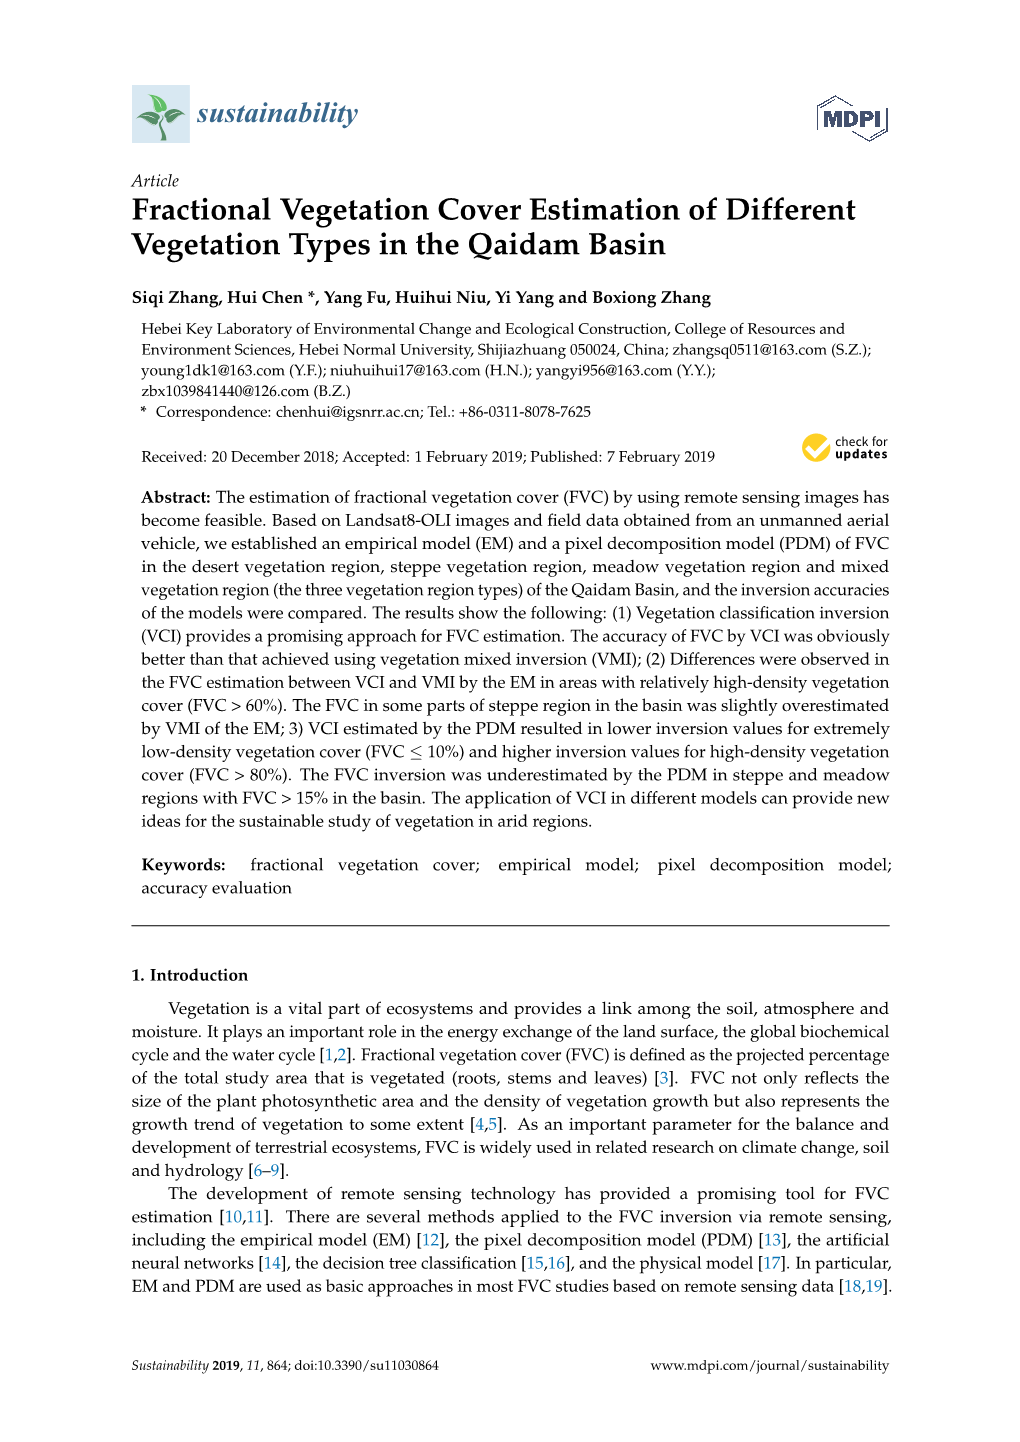 Fractional Vegetation Cover Estimation of Different Vegetation Types in the Qaidam Basin